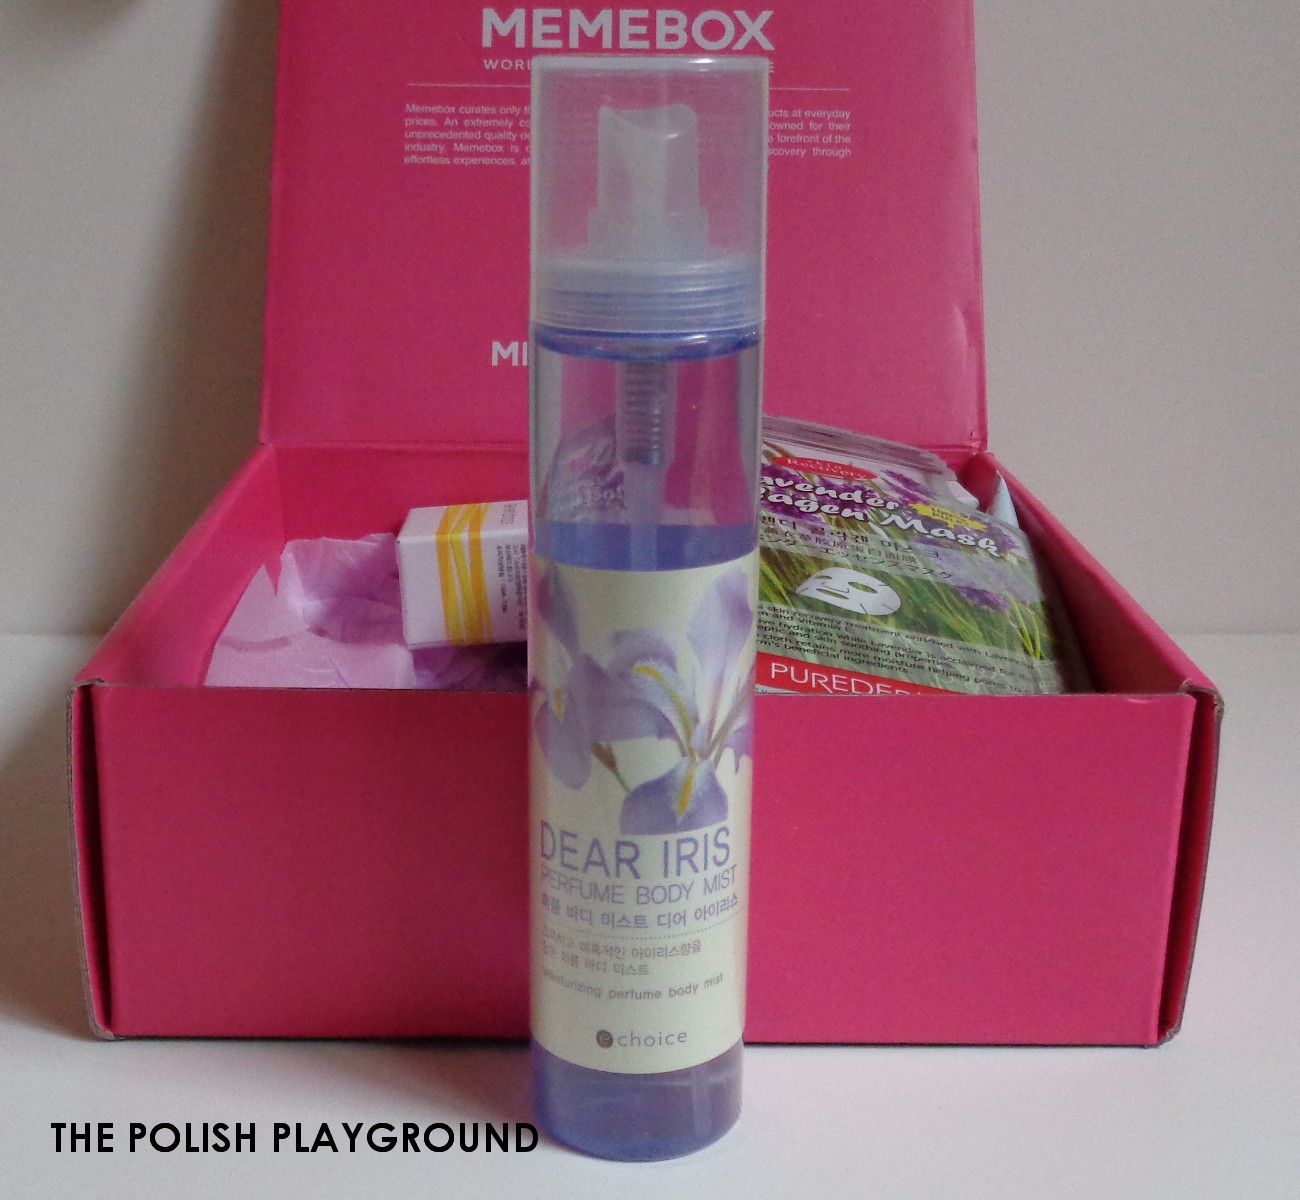 Memebox Seeds & Flowers Unboxing - ECHOICE Perfume Body Mist Dear Iris